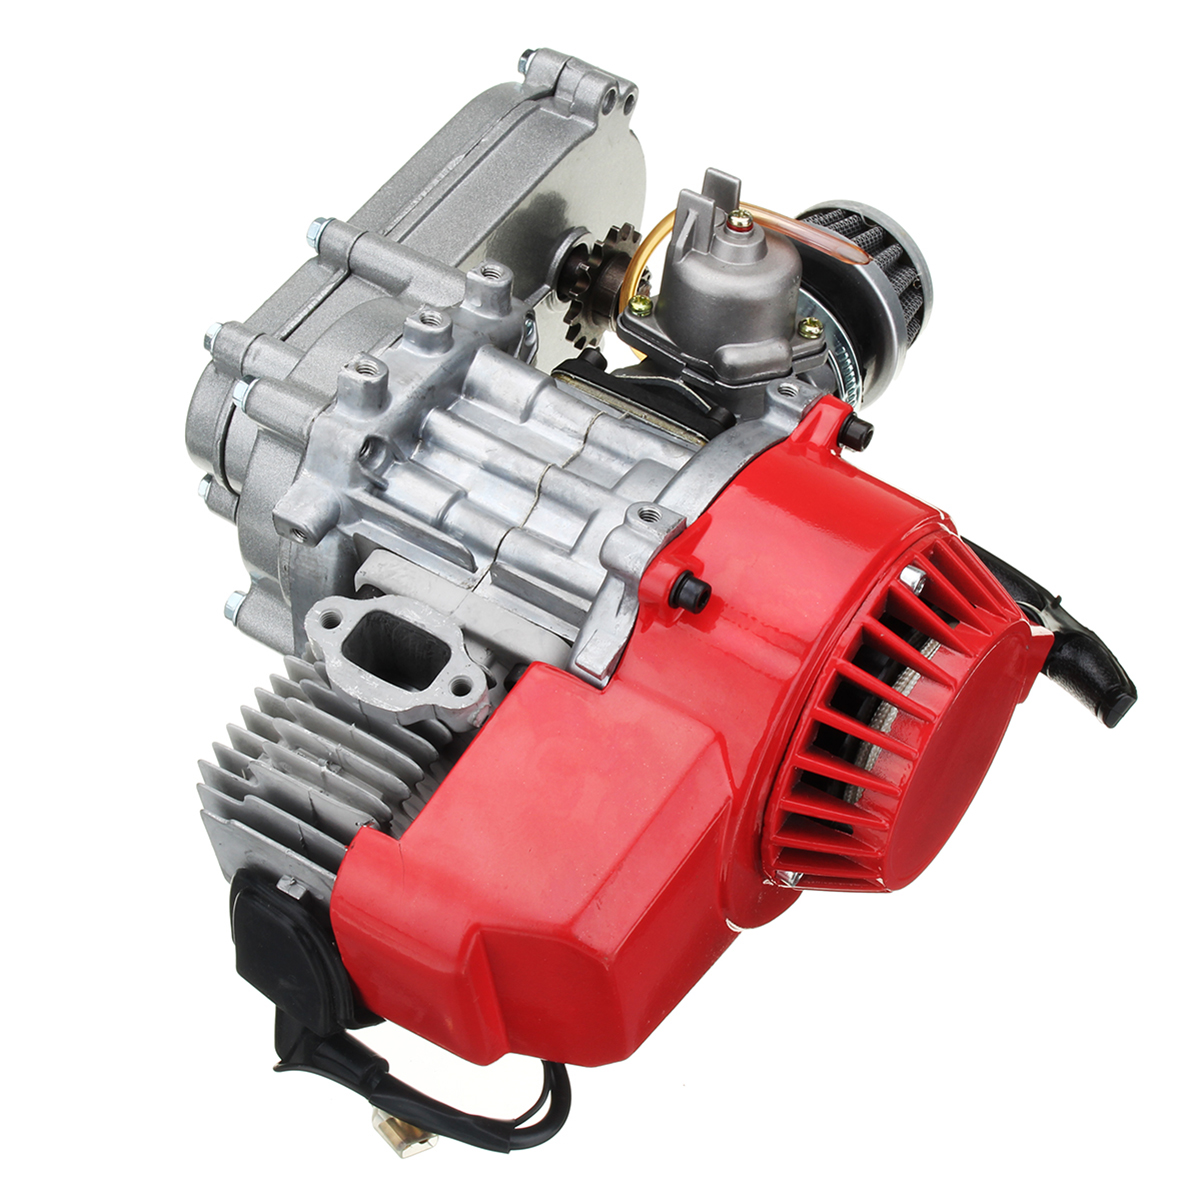 49Cc Engine 2-Stroke Pull Start with Transmission for Mini Moto Dirt Bike Red